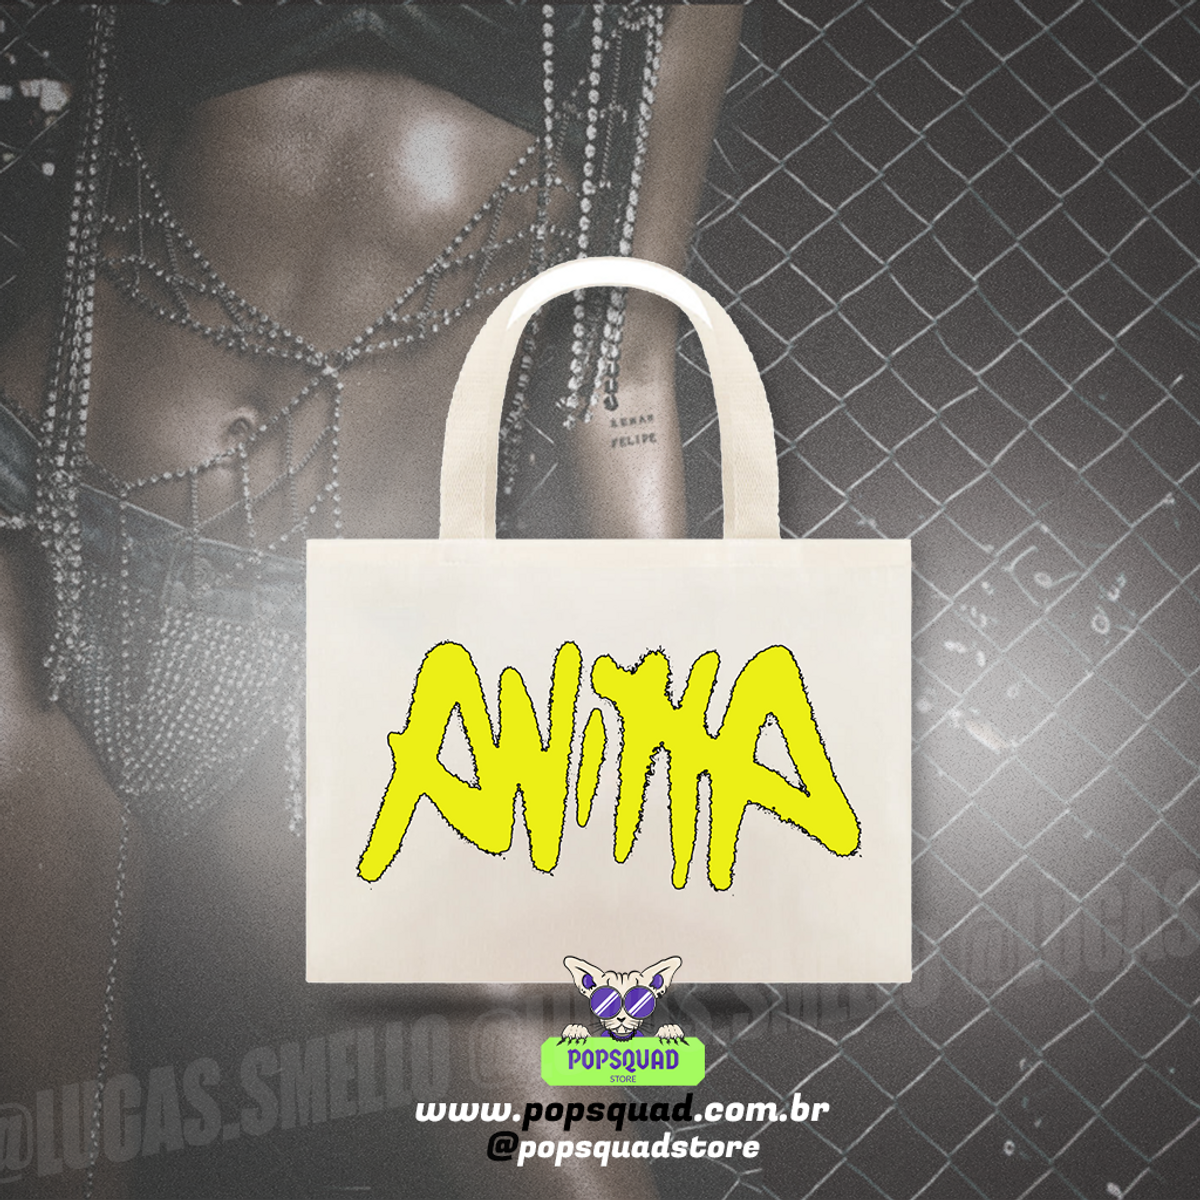 Nome do produto: Ecobag Anitta Funk Generation